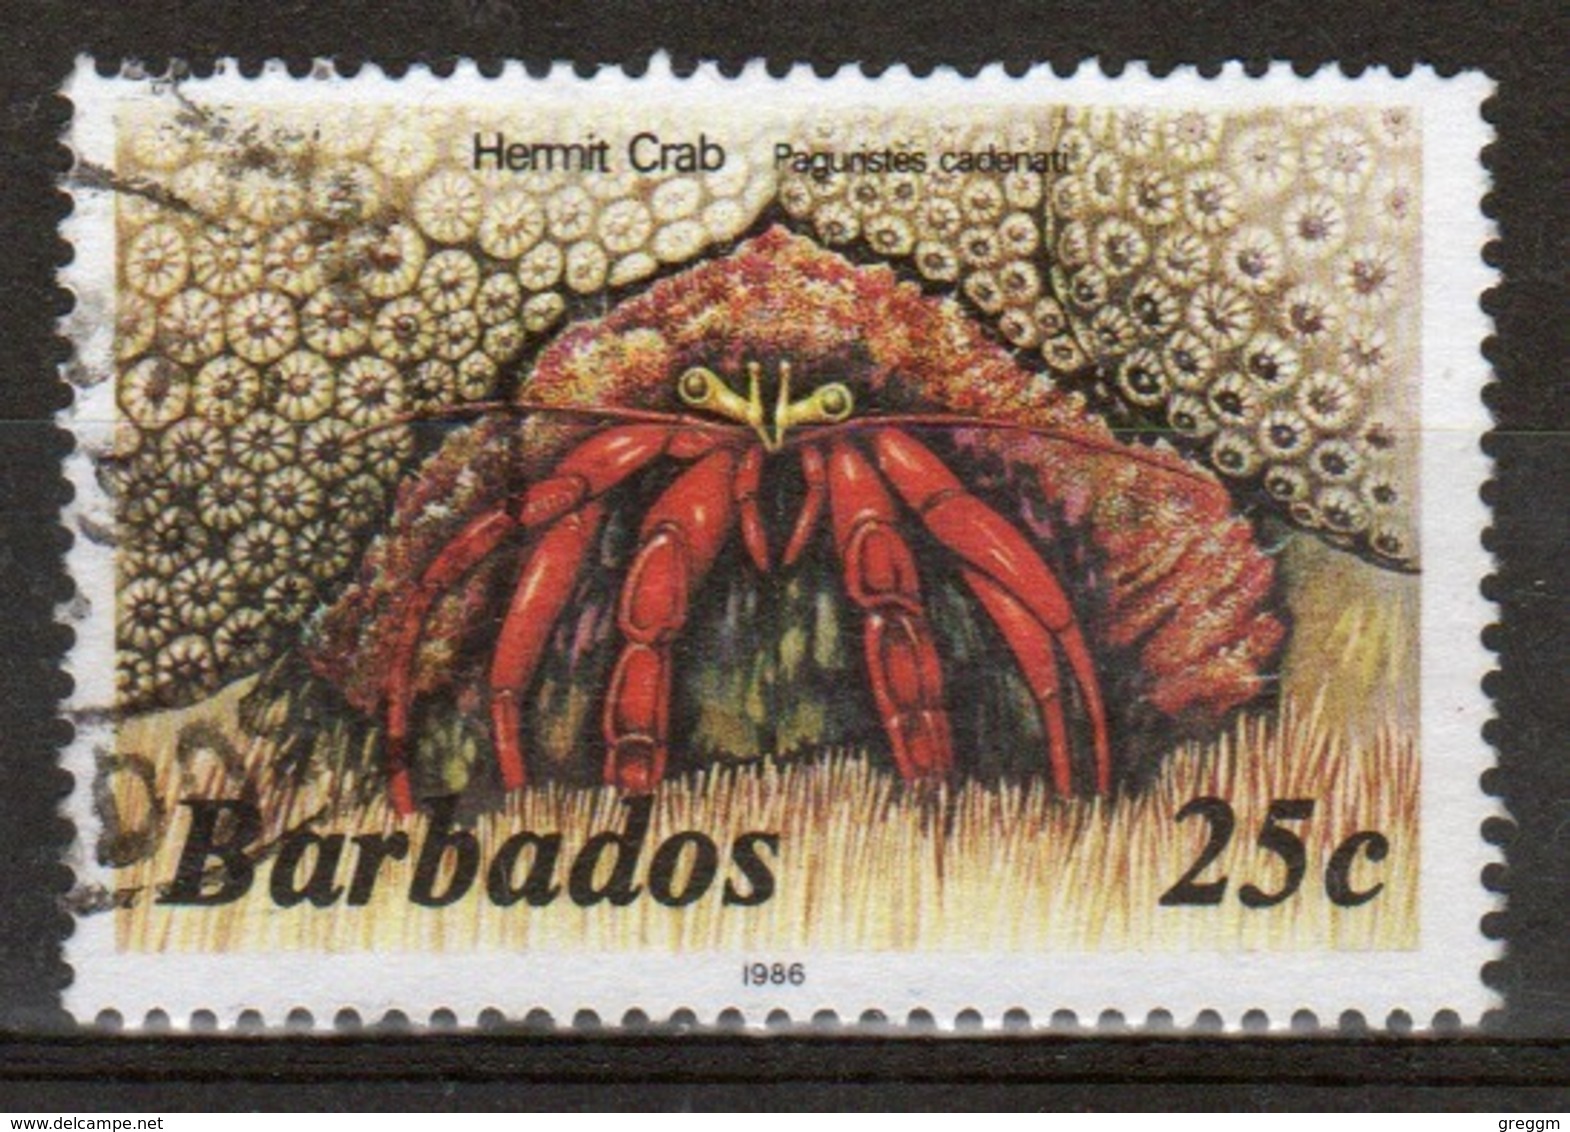 Barbados Single 25c Stamp From The 1985 Marine Life Series. - Barbados (1966-...)